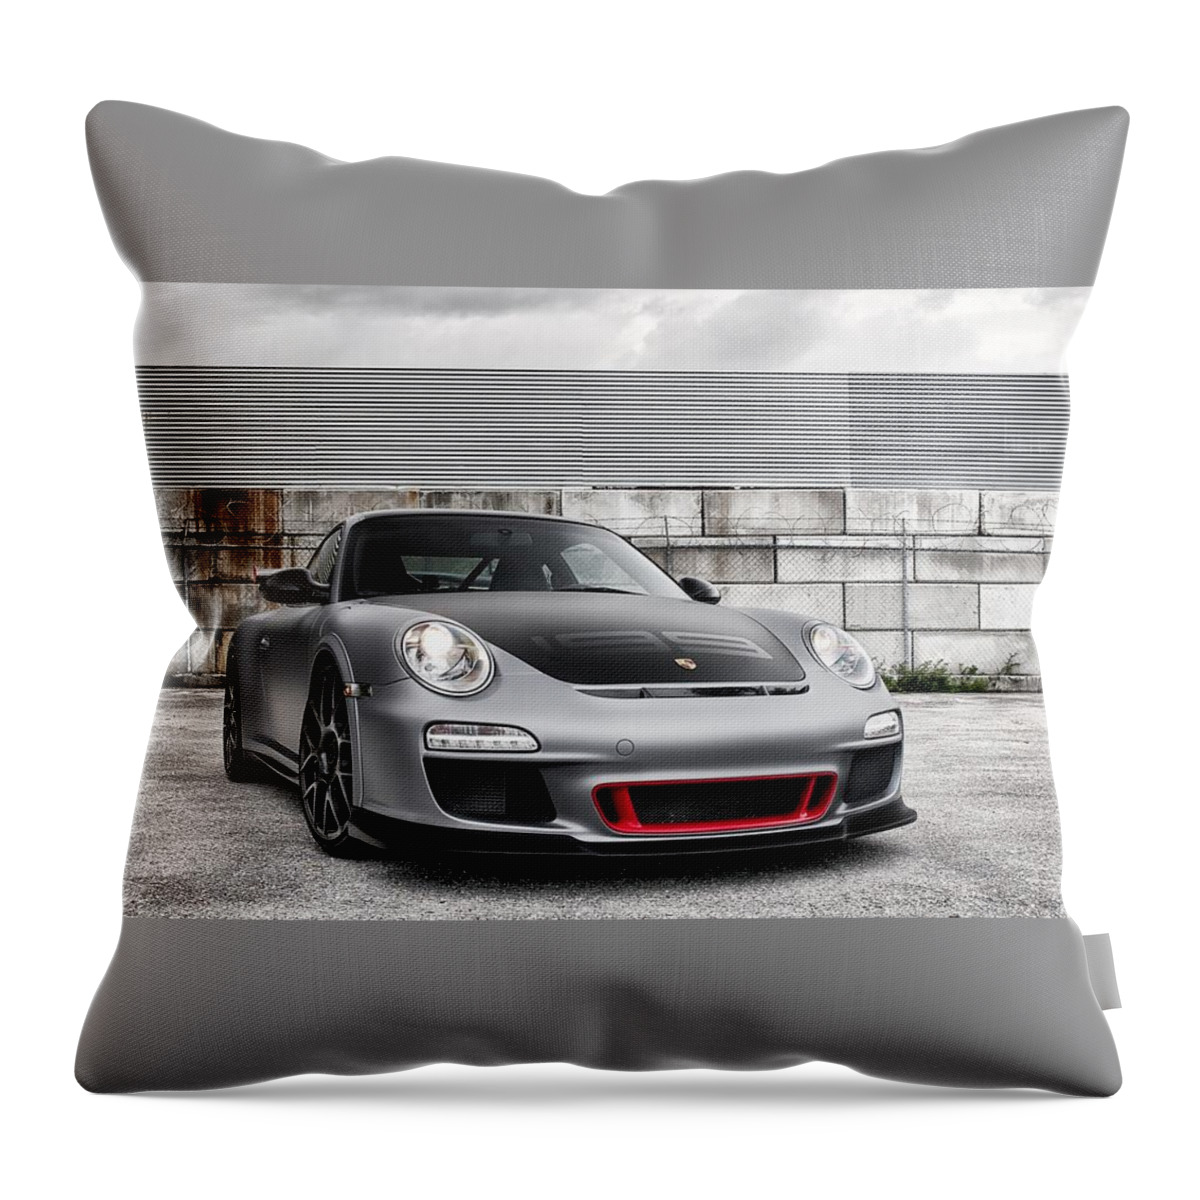 Porsche Throw Pillow featuring the photograph Porsche #5 by Jackie Russo